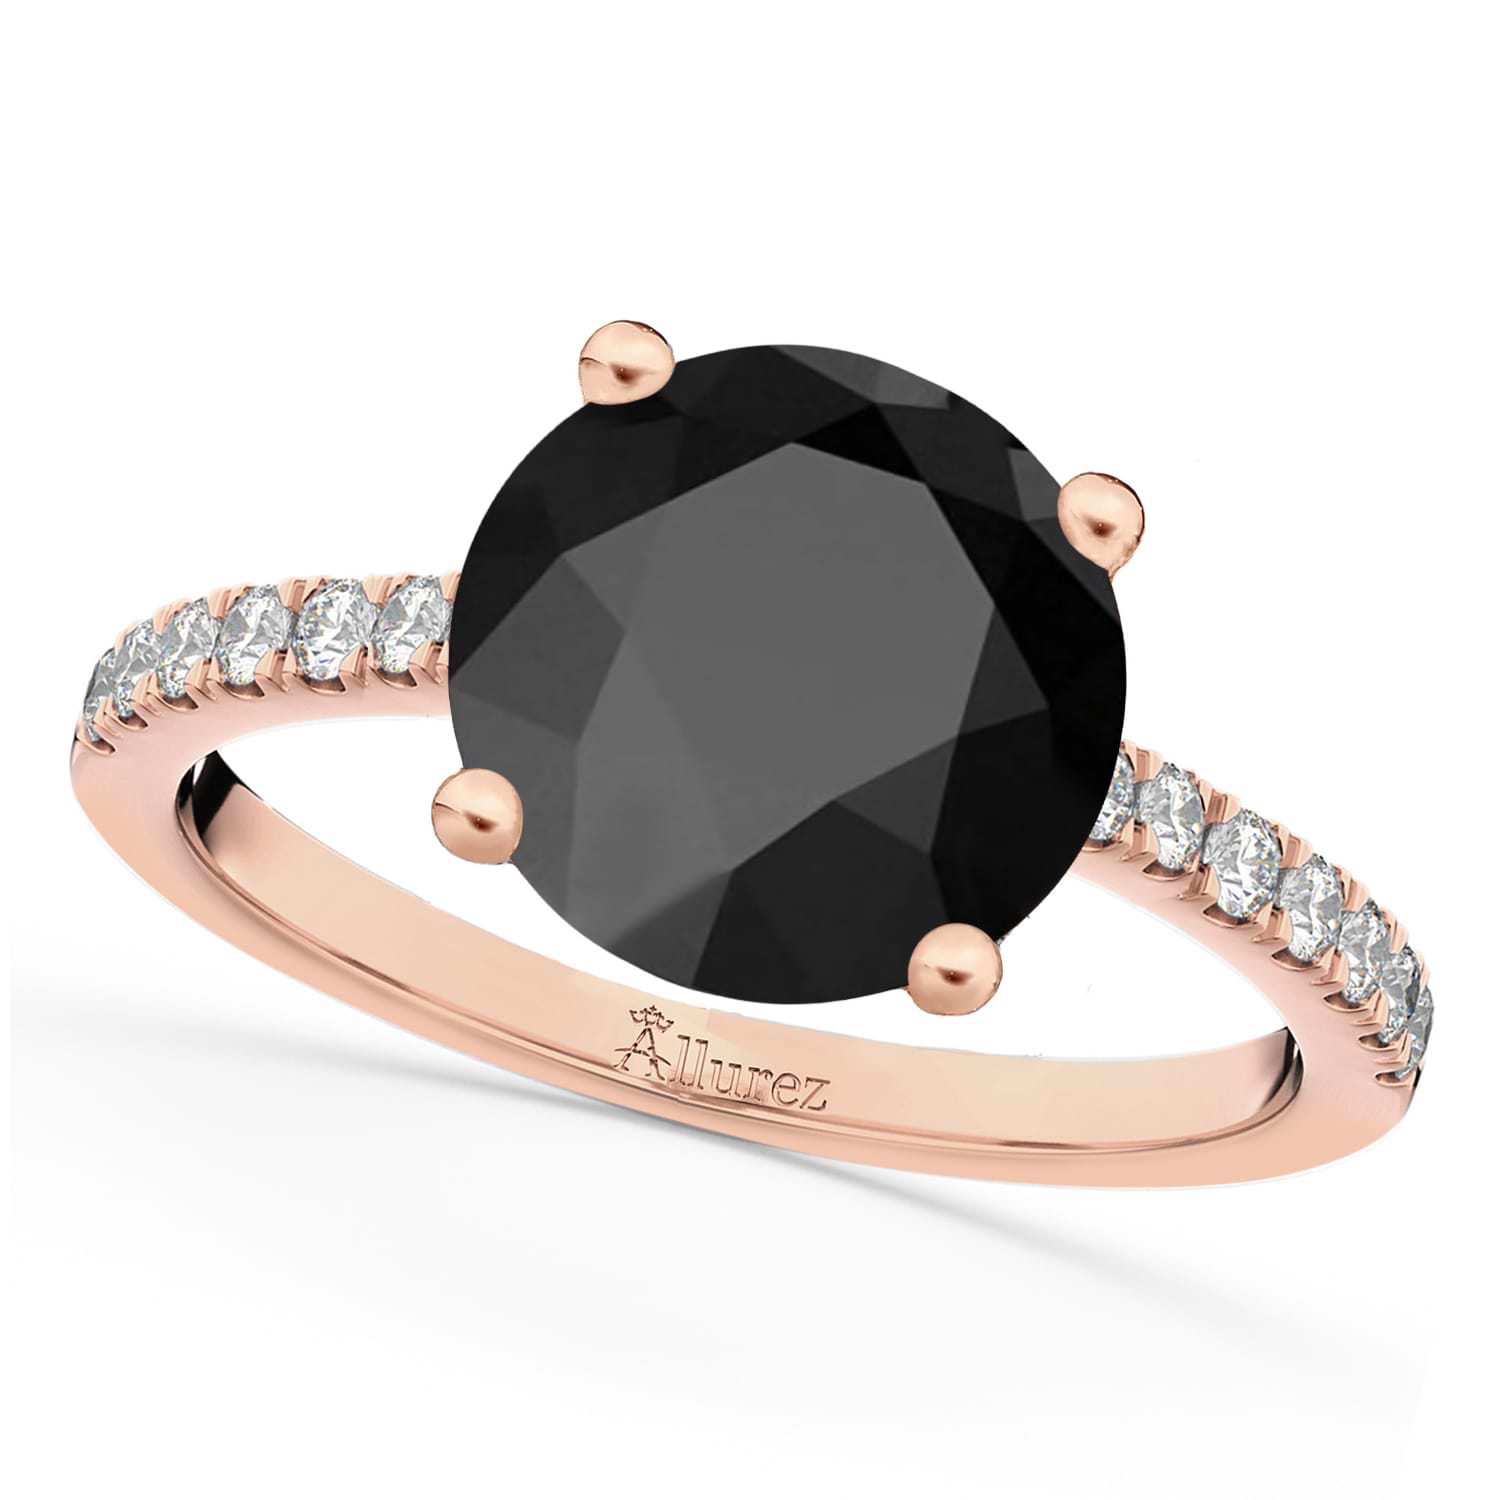 Onyx & Diamond Engagement Ring 14K Rose Gold 2.71ct